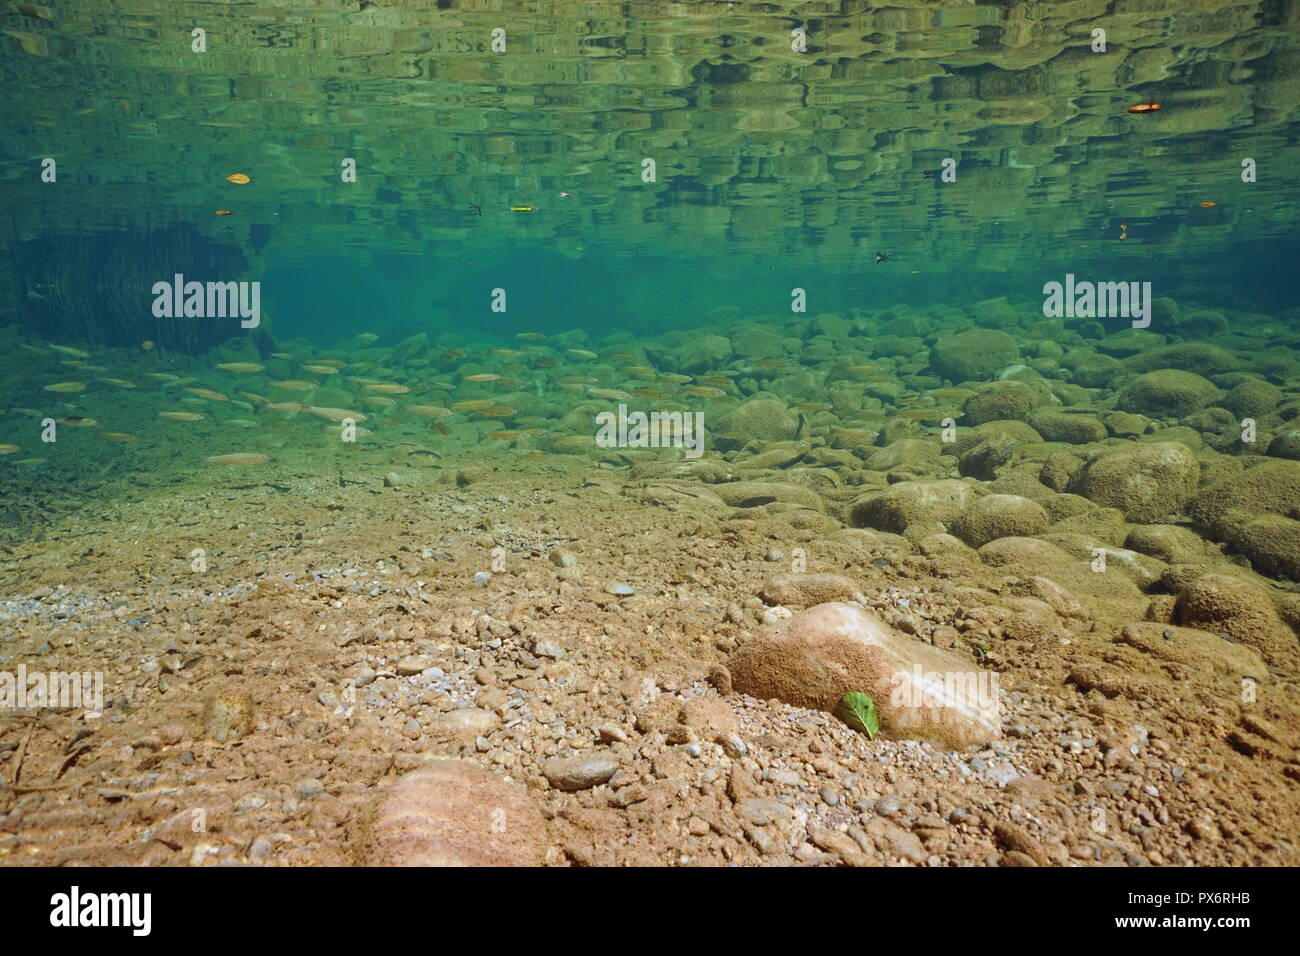 Underwater in a rocky river with a school of freshwater fish (chub Squalius cephalus), La Muga, Alt Emporda, Catalonia, Spain Stock Photo